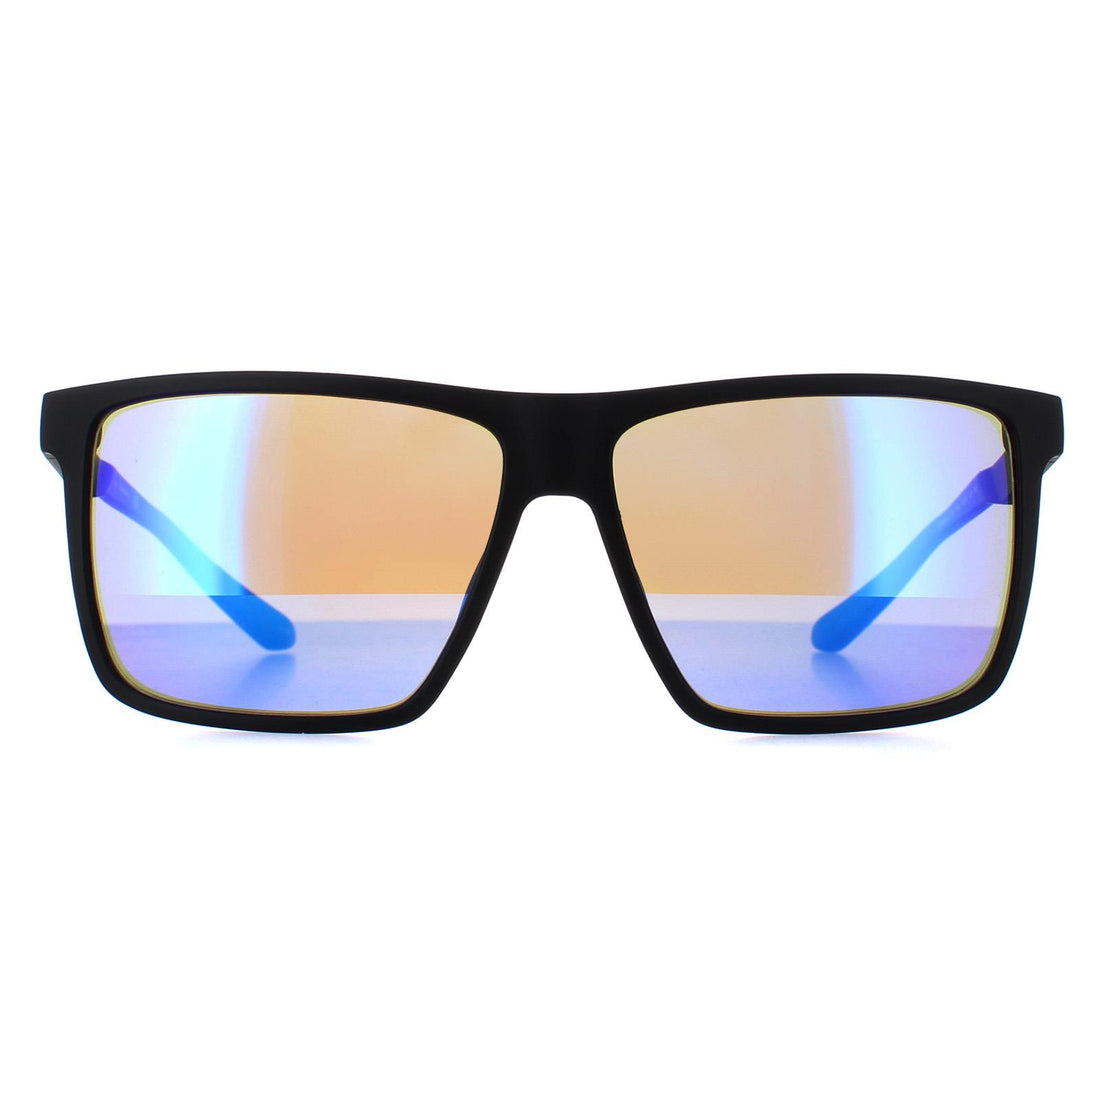 Dragon Sunglasses Sparrow 48088-003 Matte Black Lumalens Blue Ionized